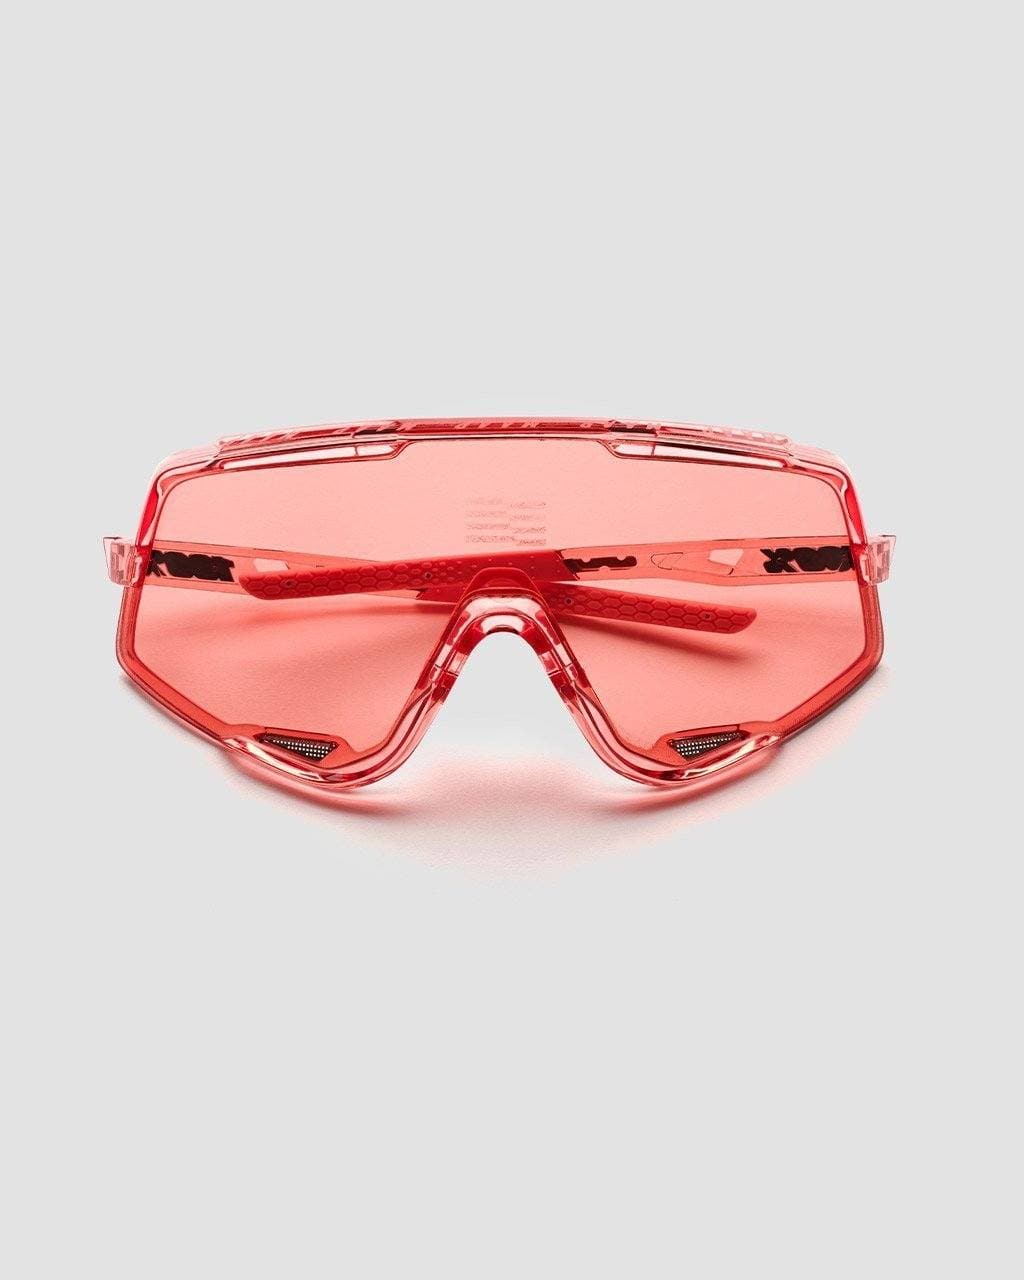 MAAP x RIDE 100% Eyewear Glendale - Light Coral Default 100% 